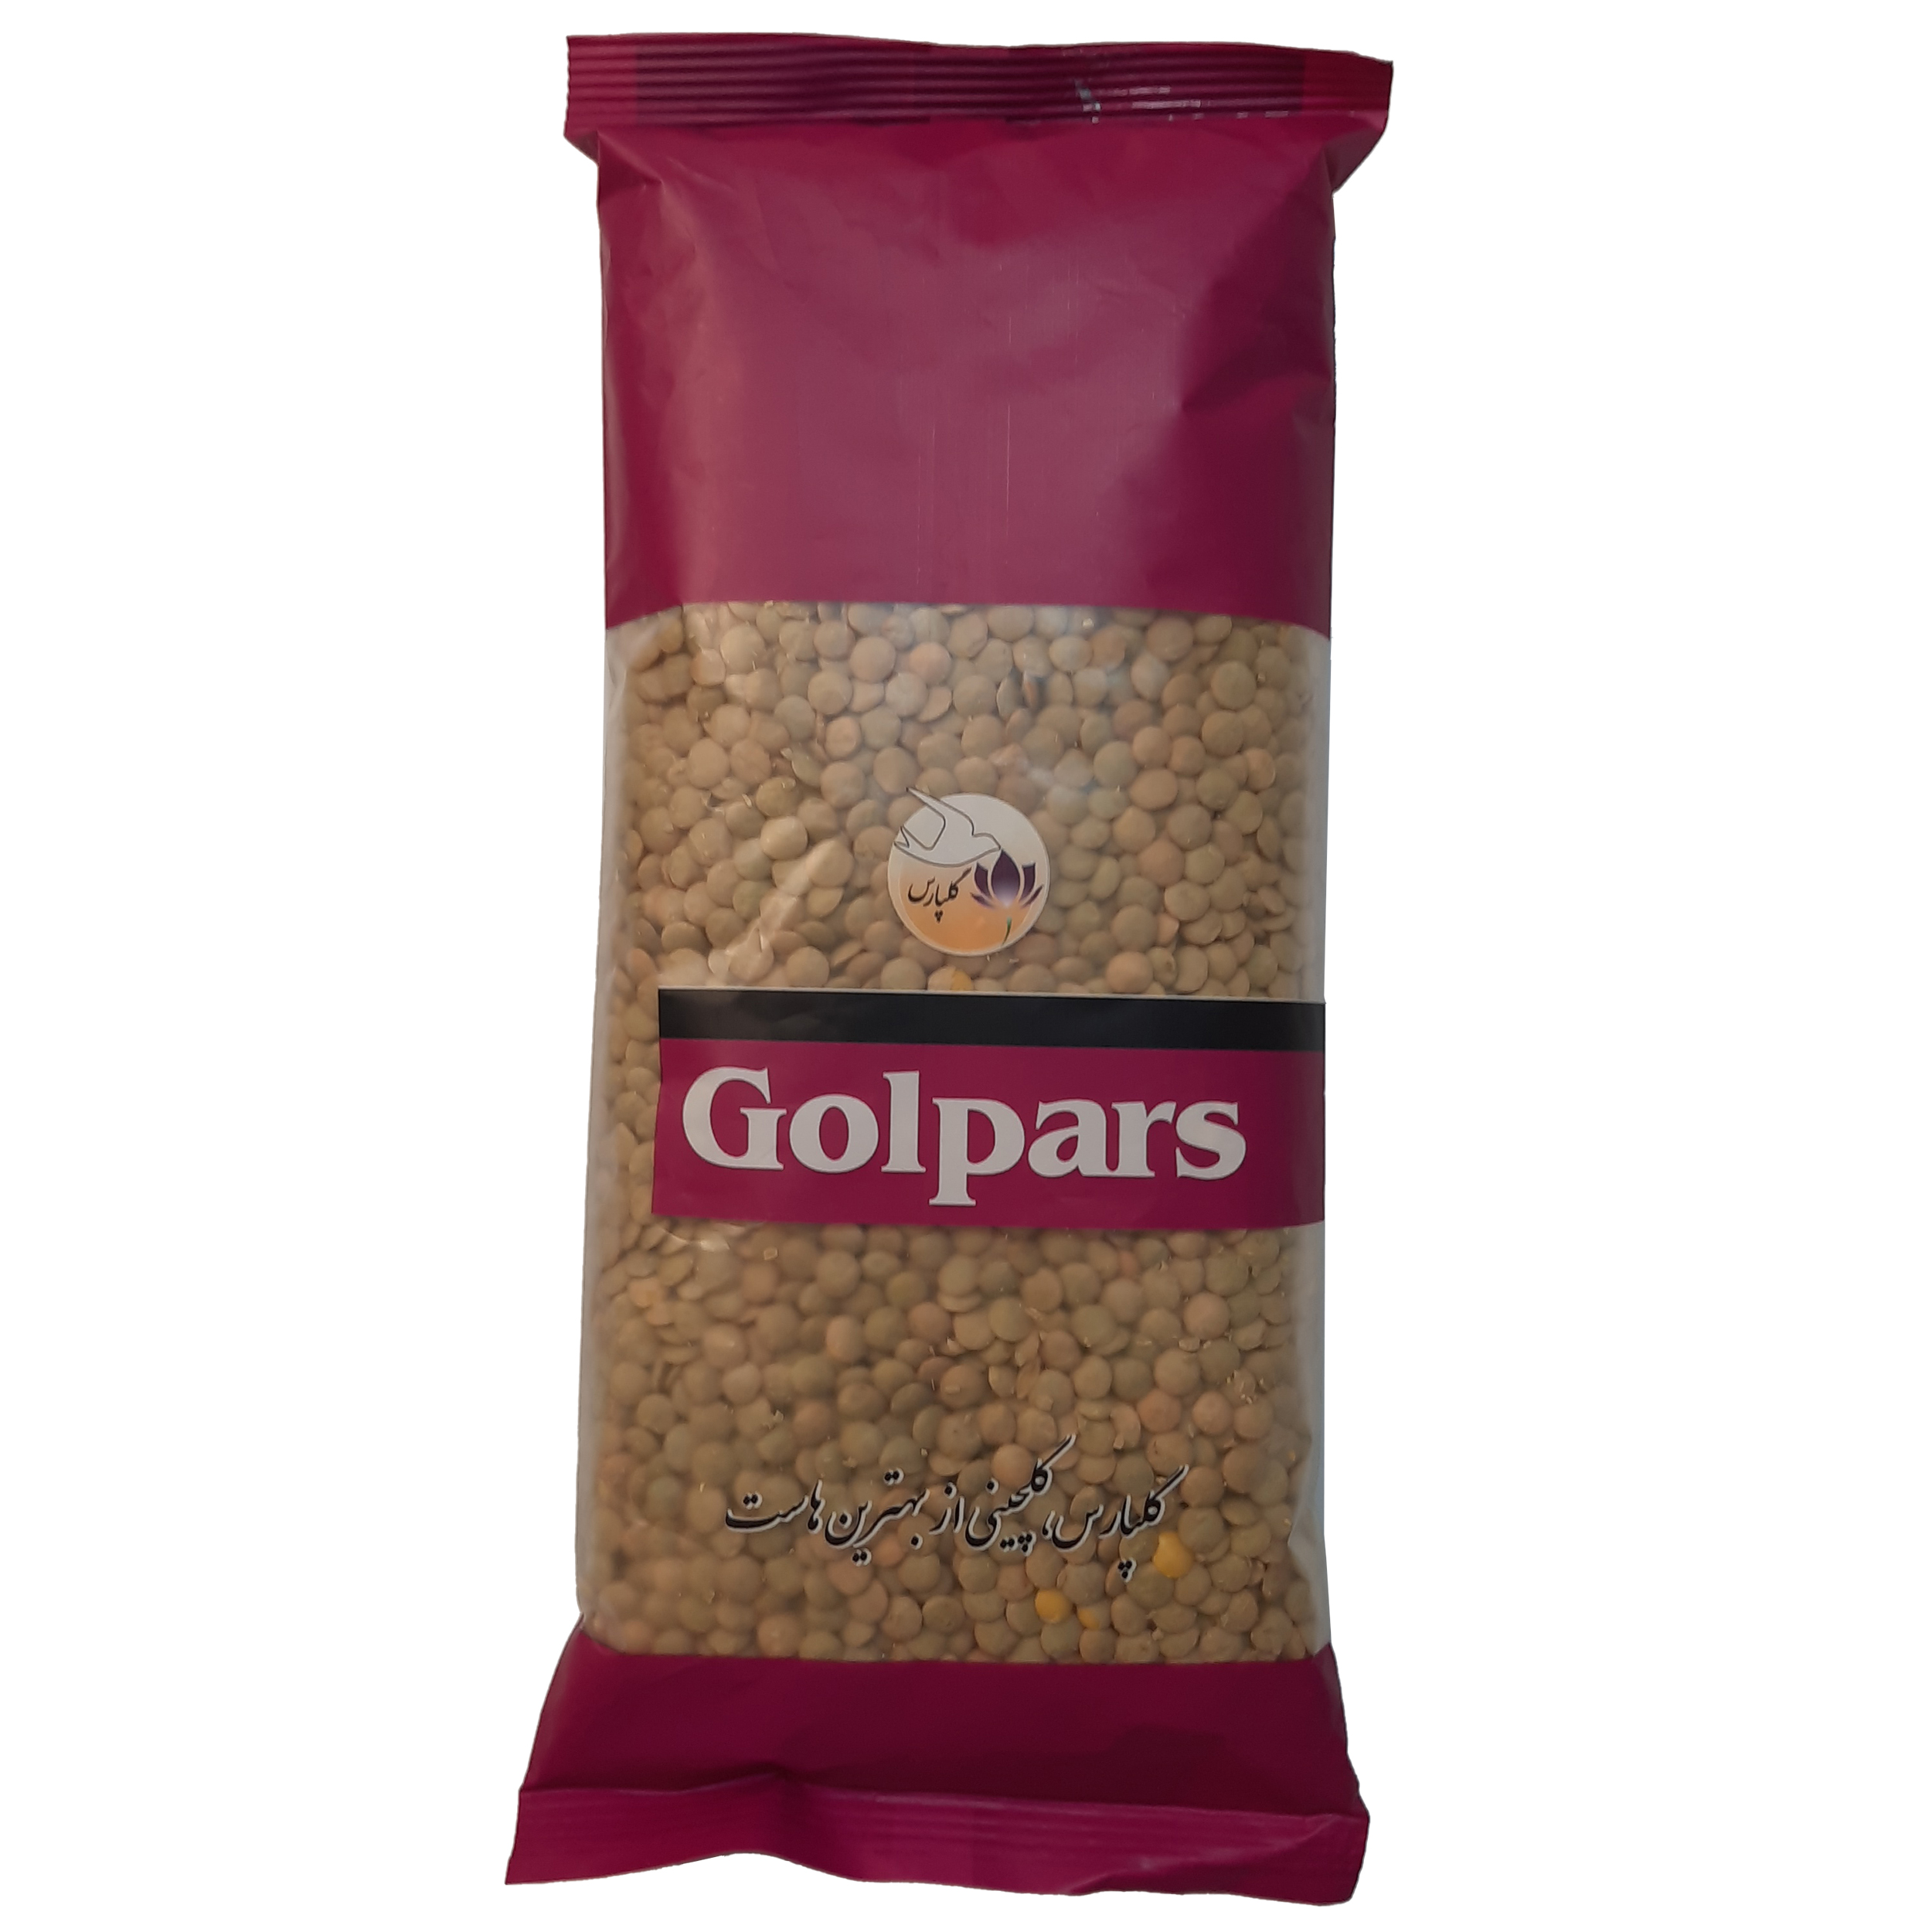 Golpars lentils - 700 grams